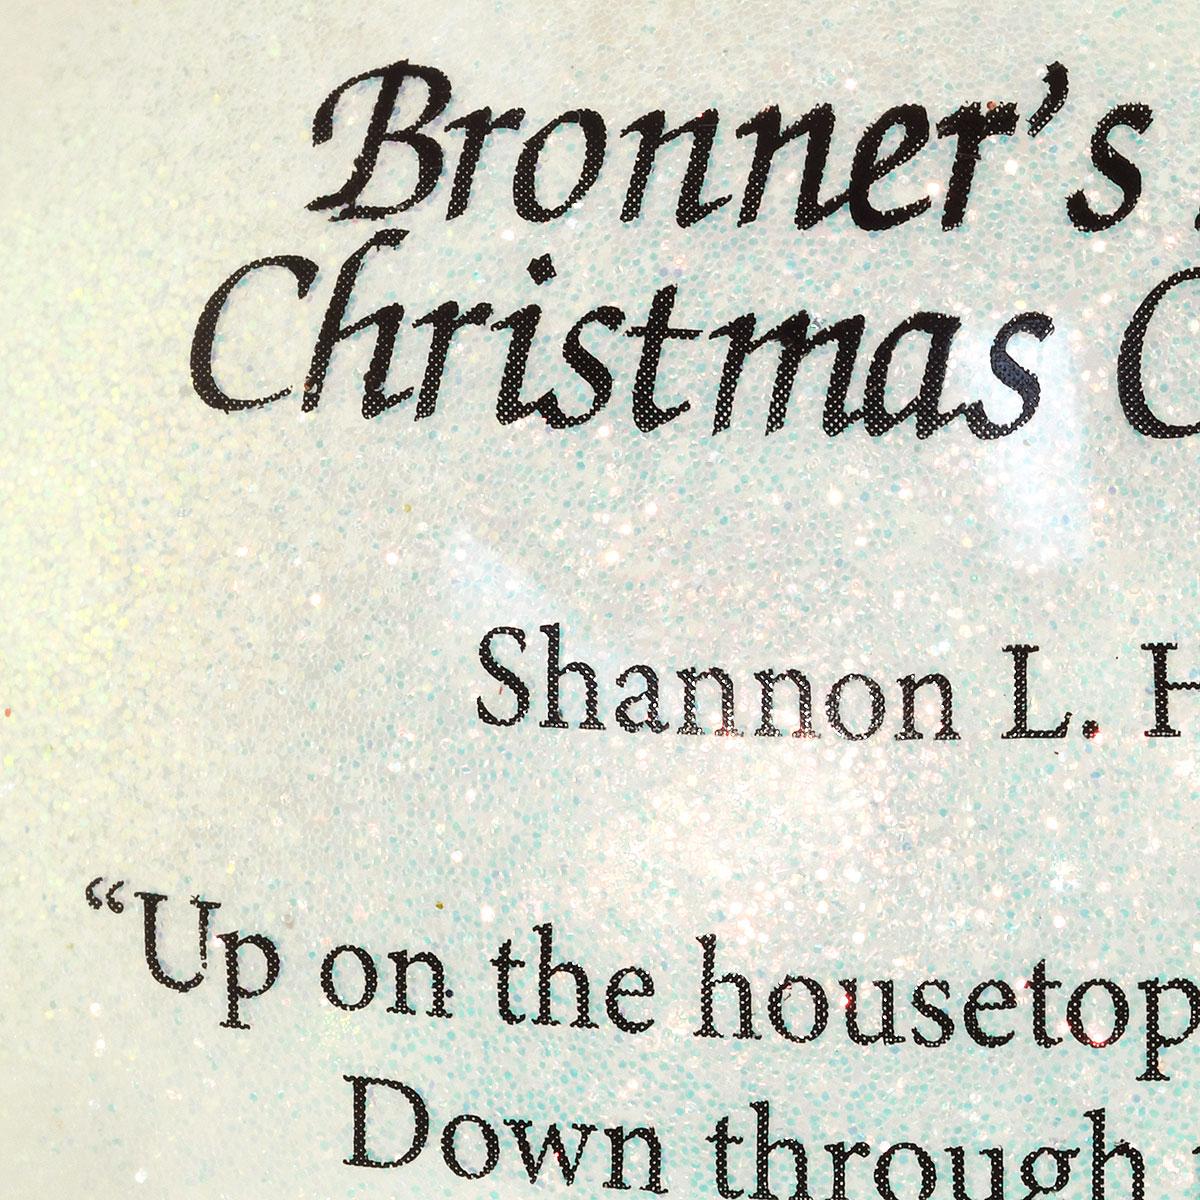 Bronner's 2022 Annual Christmas Ornament Up On The Housetop Santa